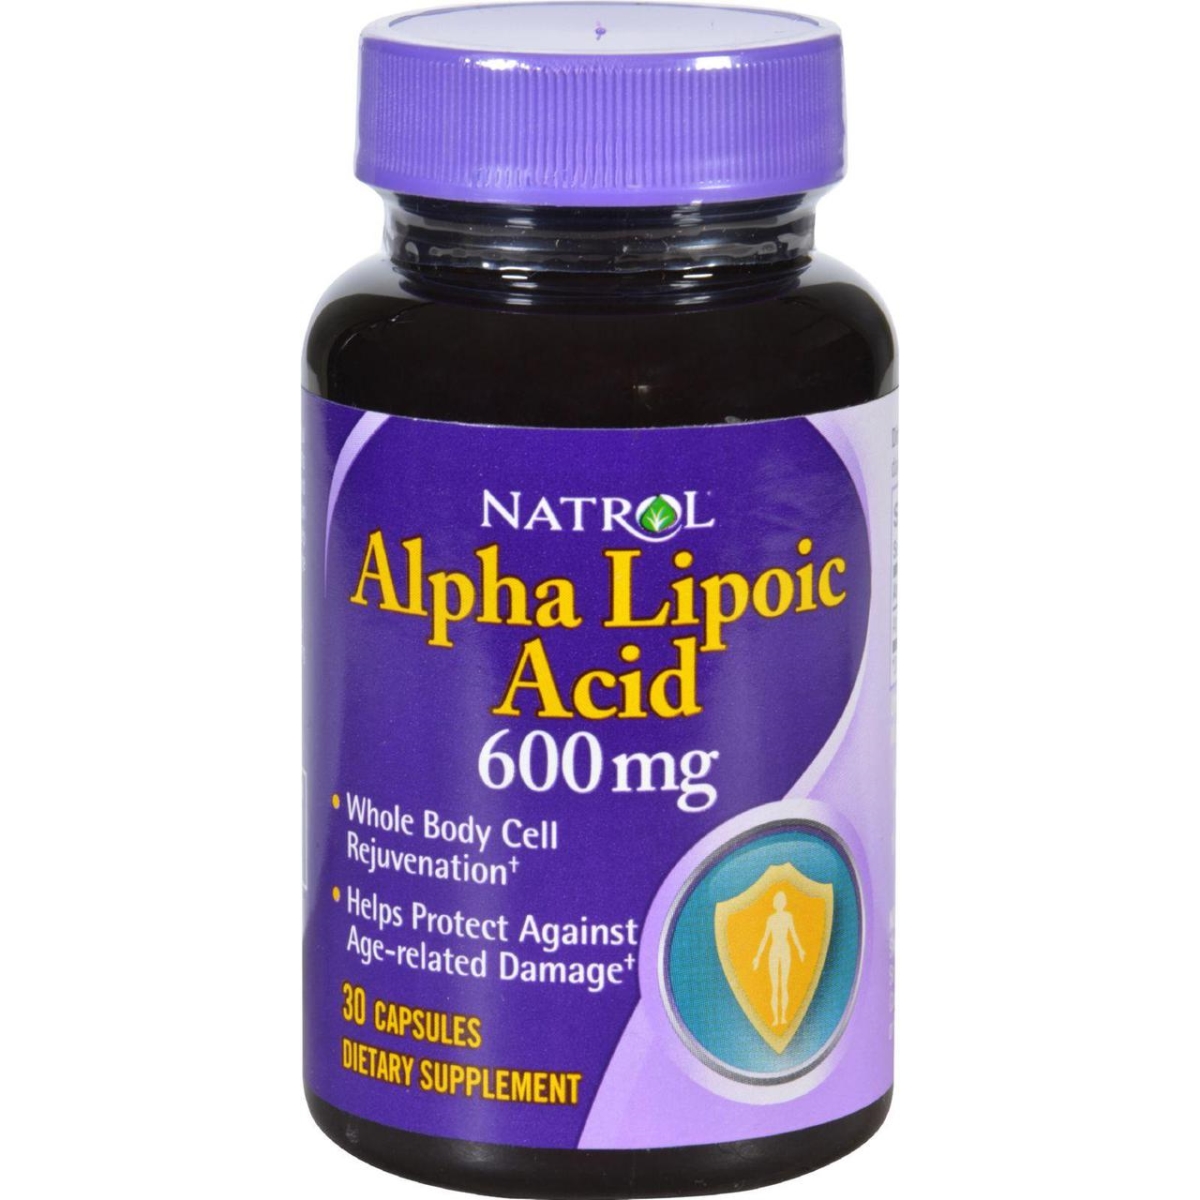 Picture of Natrol HG0600395 600 mg Alpha Lipoic Acid - 30 Capsules